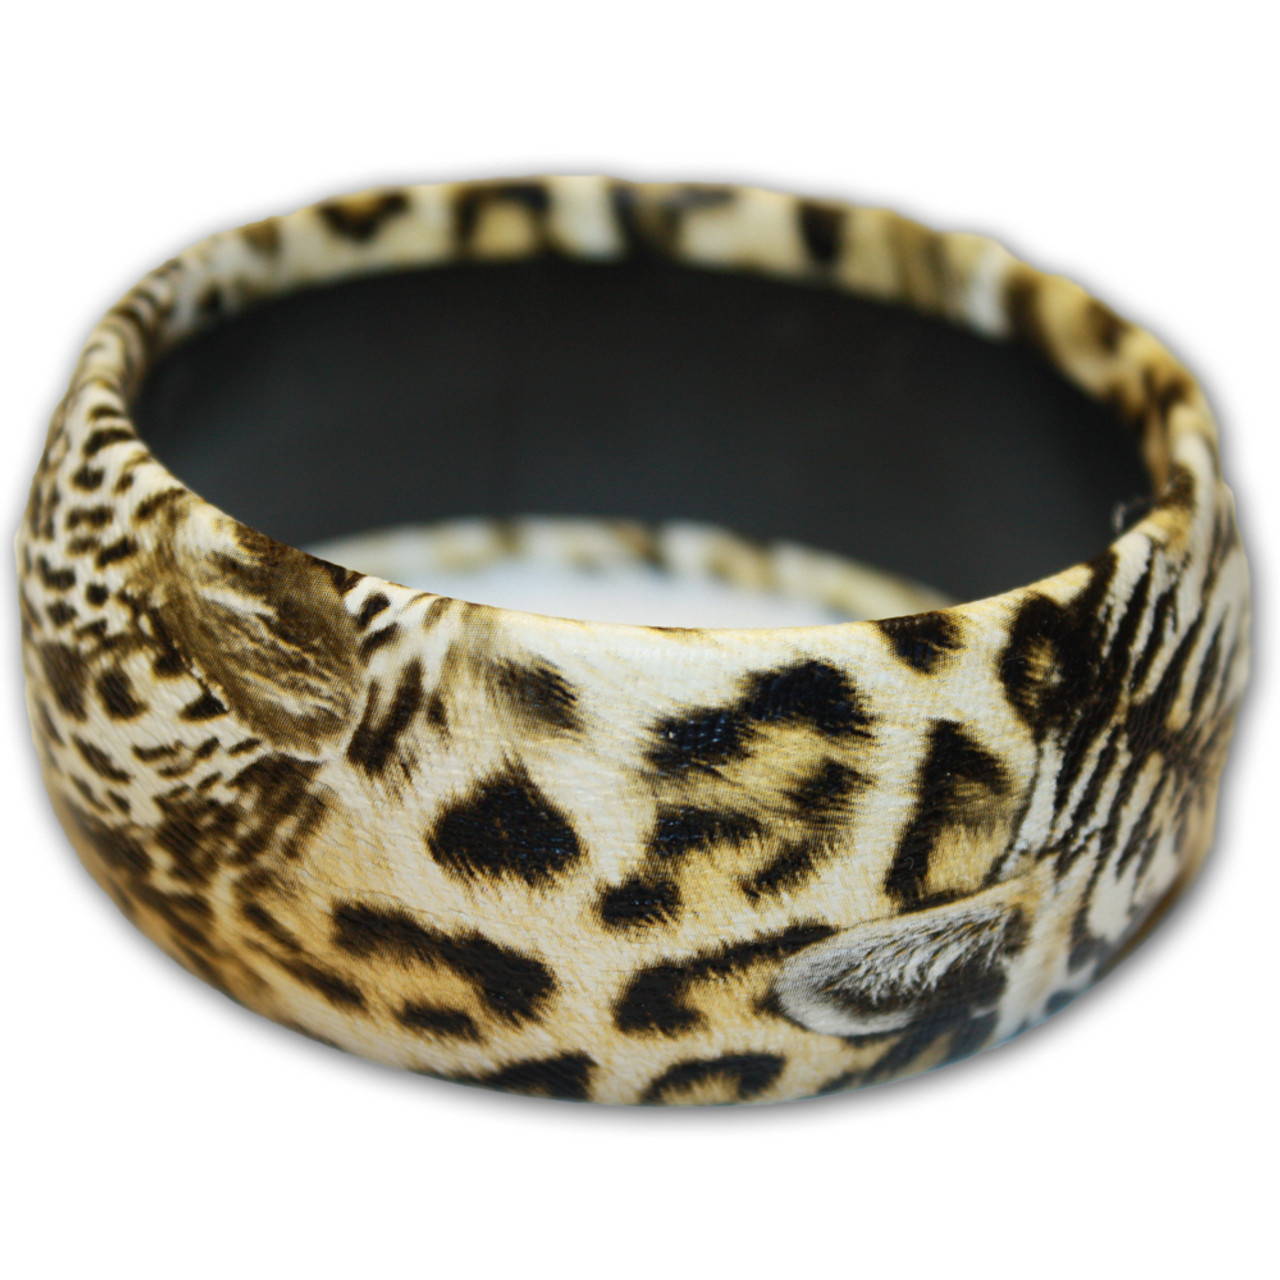 Animal print bracelets at wholesale prices.